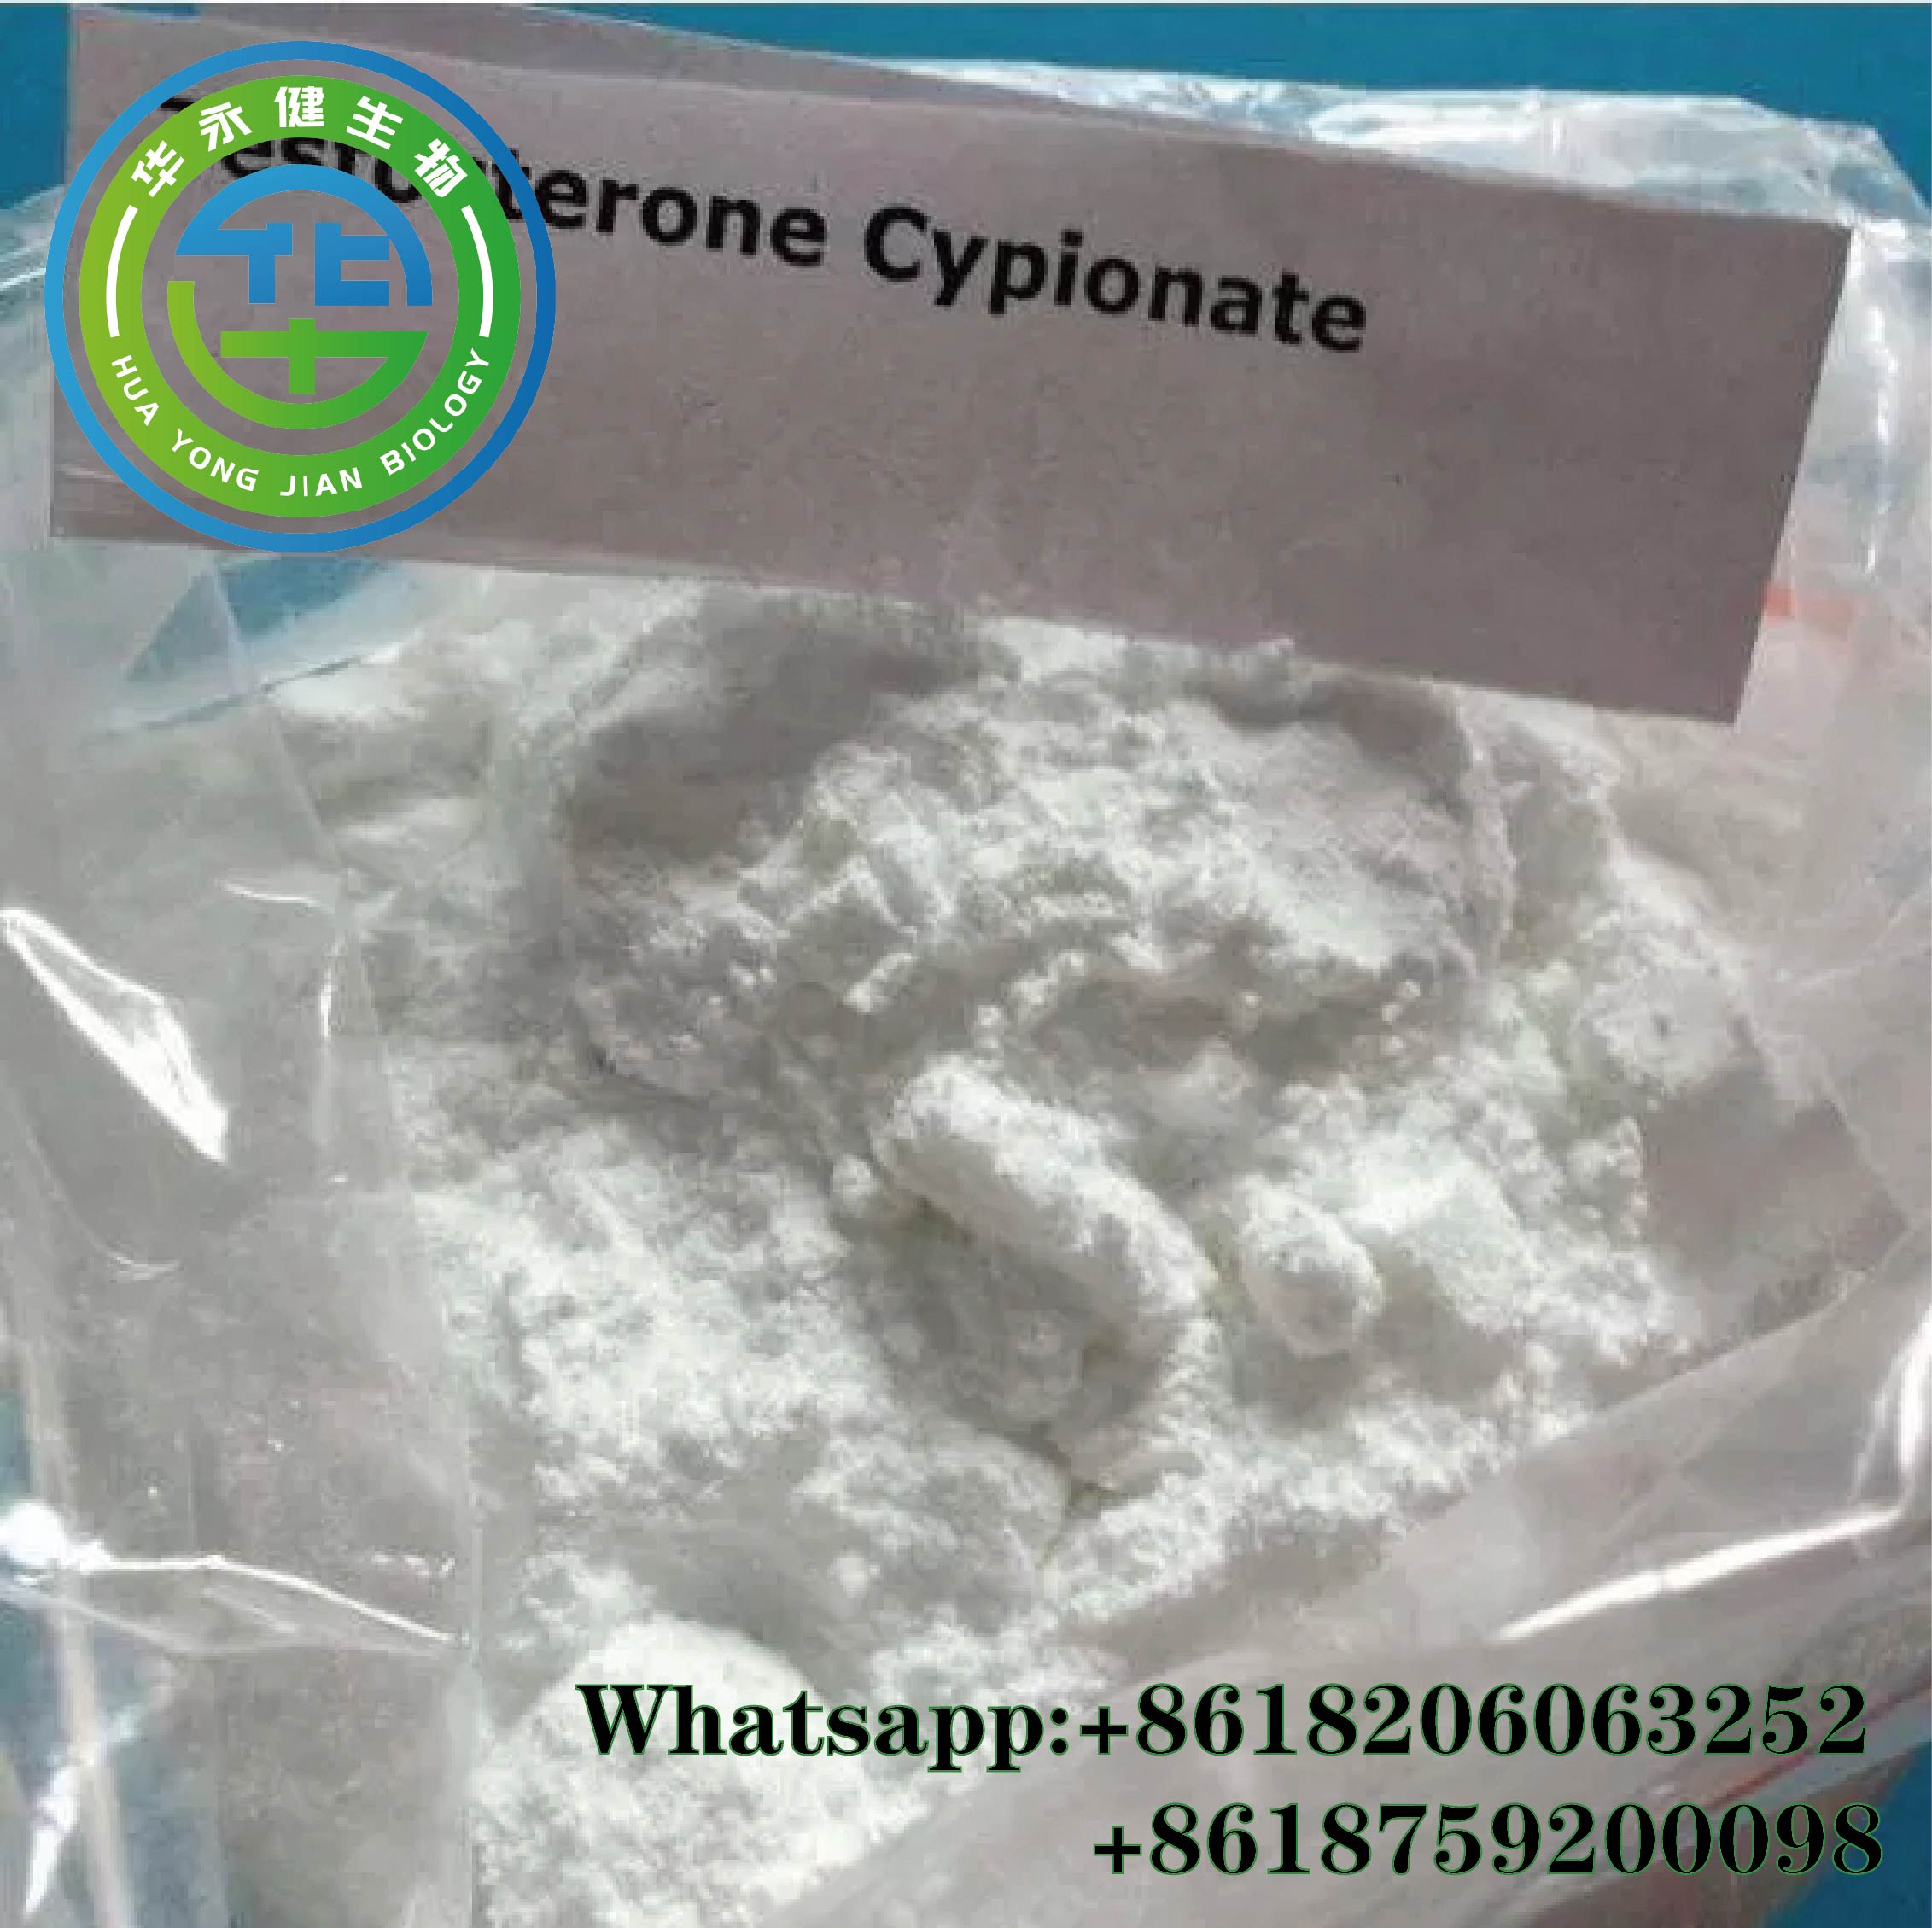 Test Cyp/Testosterone Cypionate Anabolic Steroids Powder for Bodybuilding CAS 58-20-8 